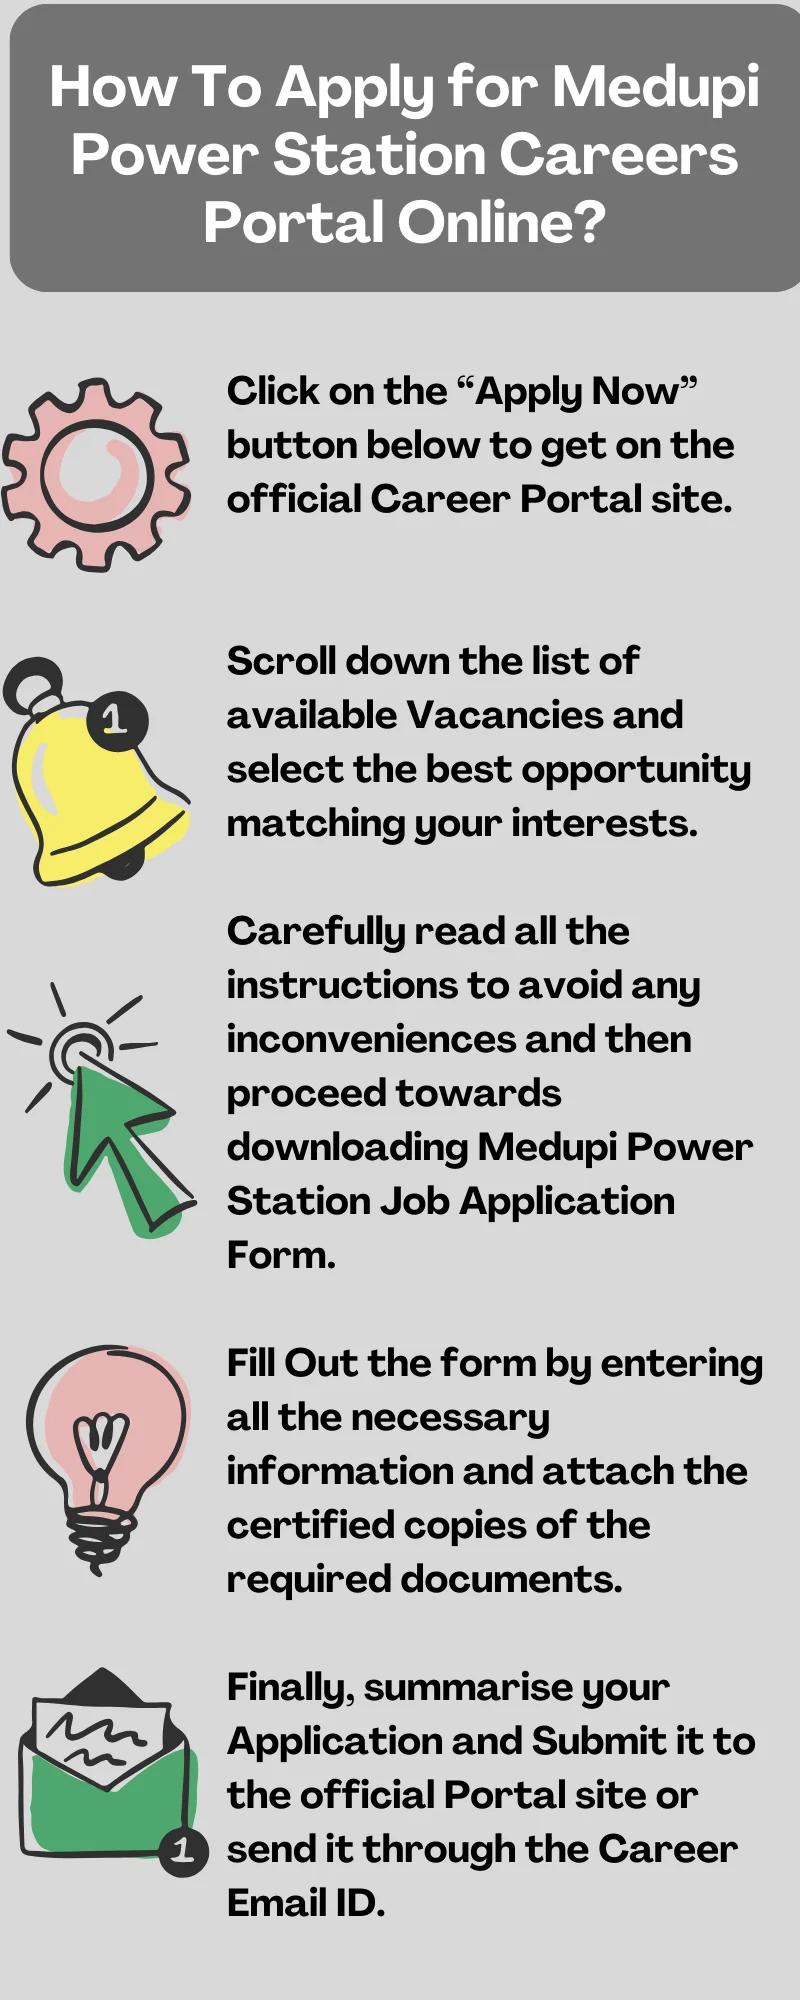 How To Apply for Medupi Power Station Careers Portal Online?